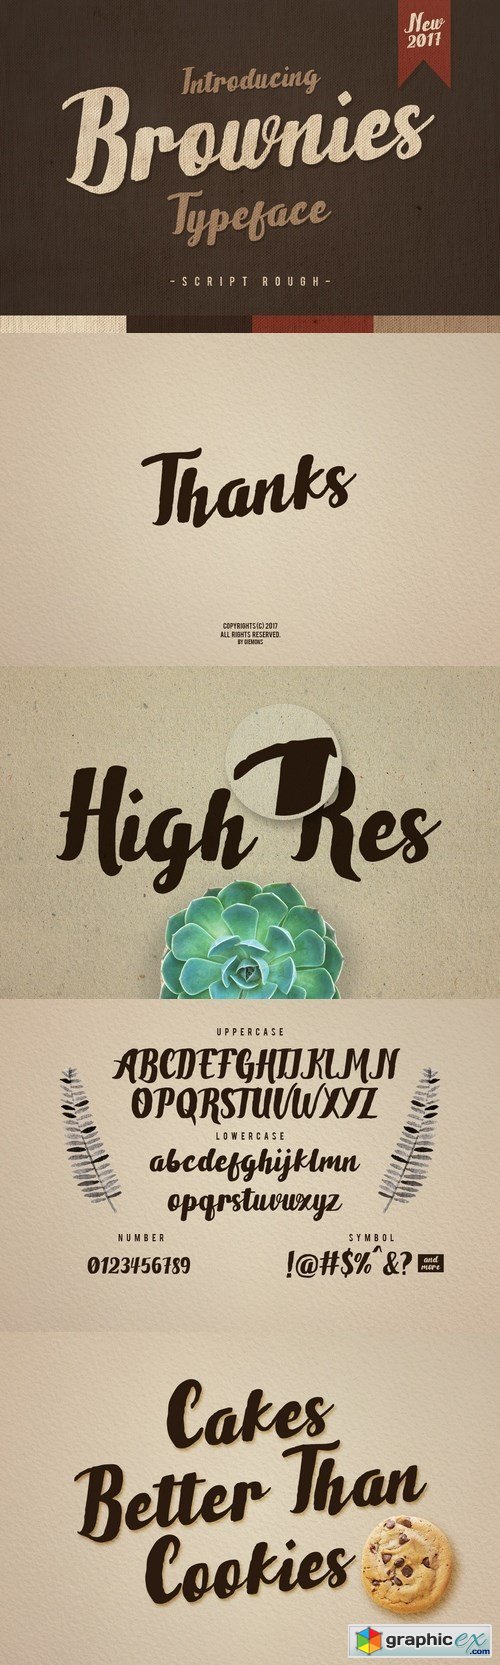 Fontbundles - Brownies Typeface